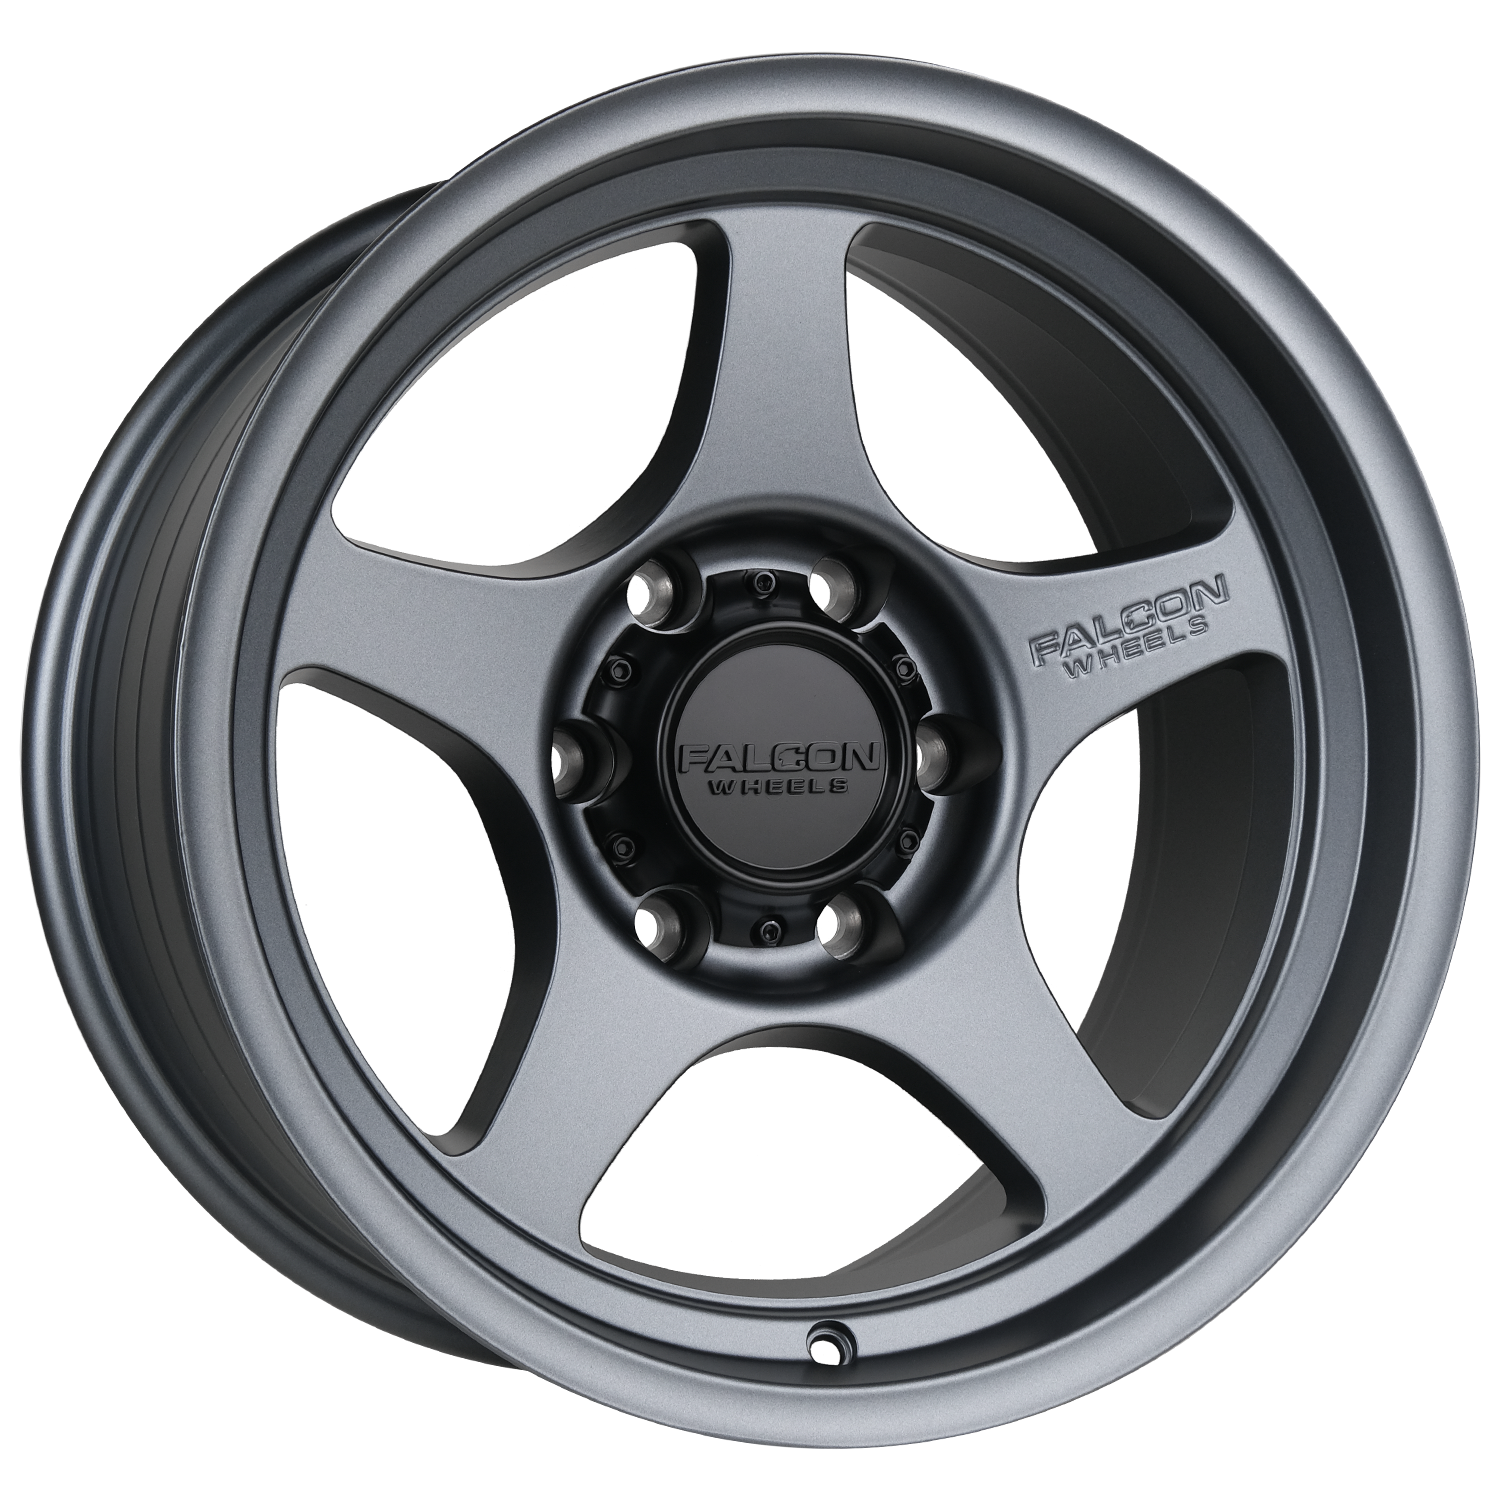 T2 - Matte Gunmetal 17x9 - Premium Wheels from Falcon Off-Road Wheels - Just $270! Shop now at Falcon Off-Road Wheels 